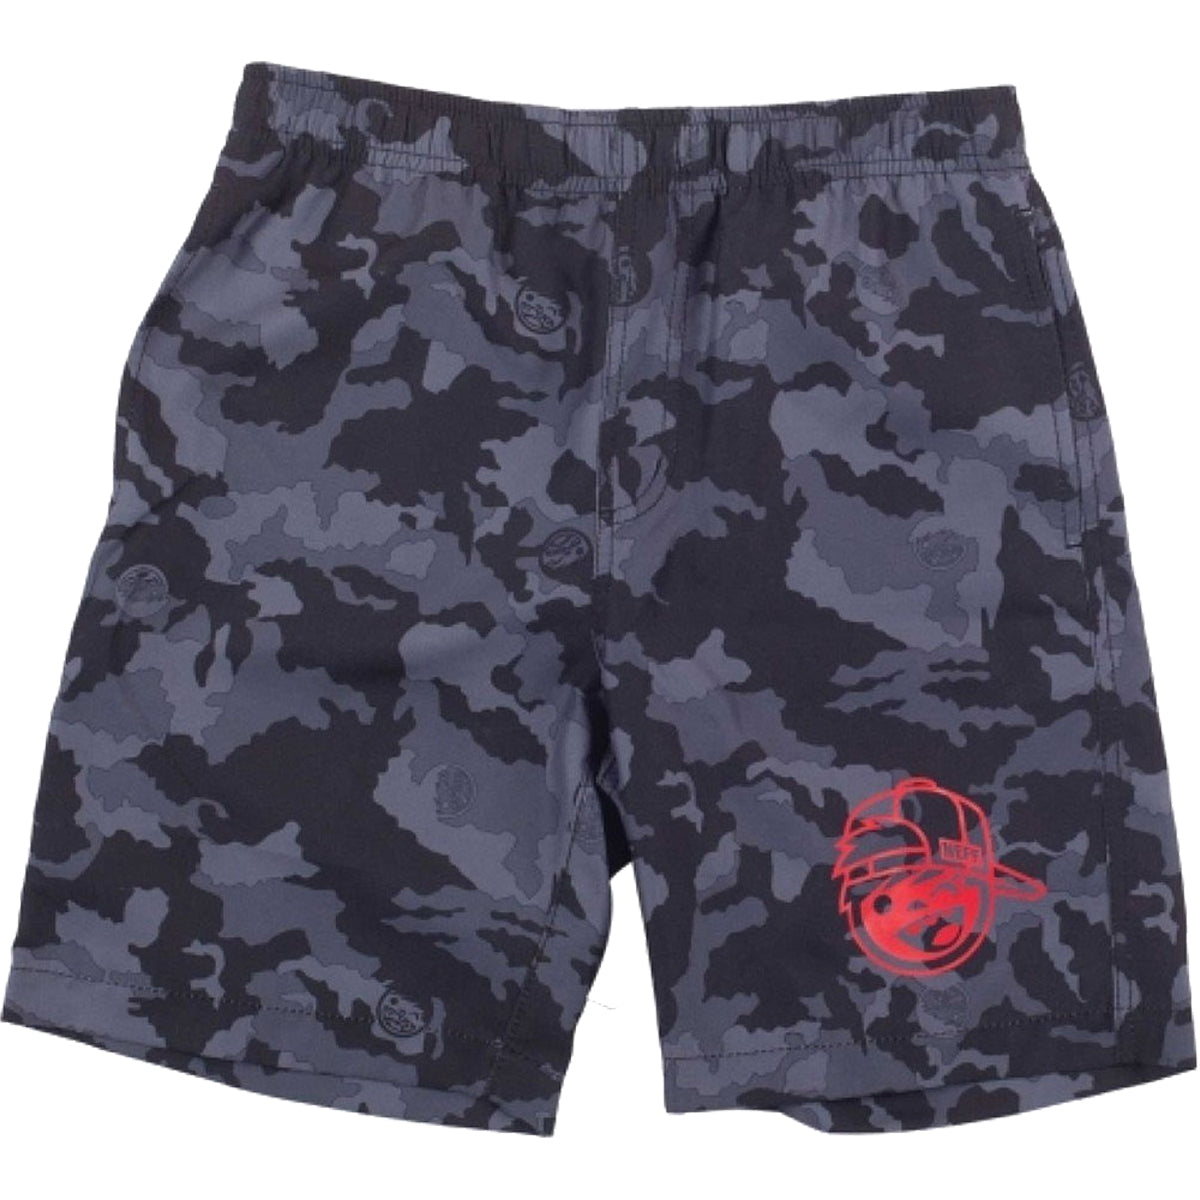 Neff Razer Hot Tub Youth Boys Boardshort Shorts - Black Camo